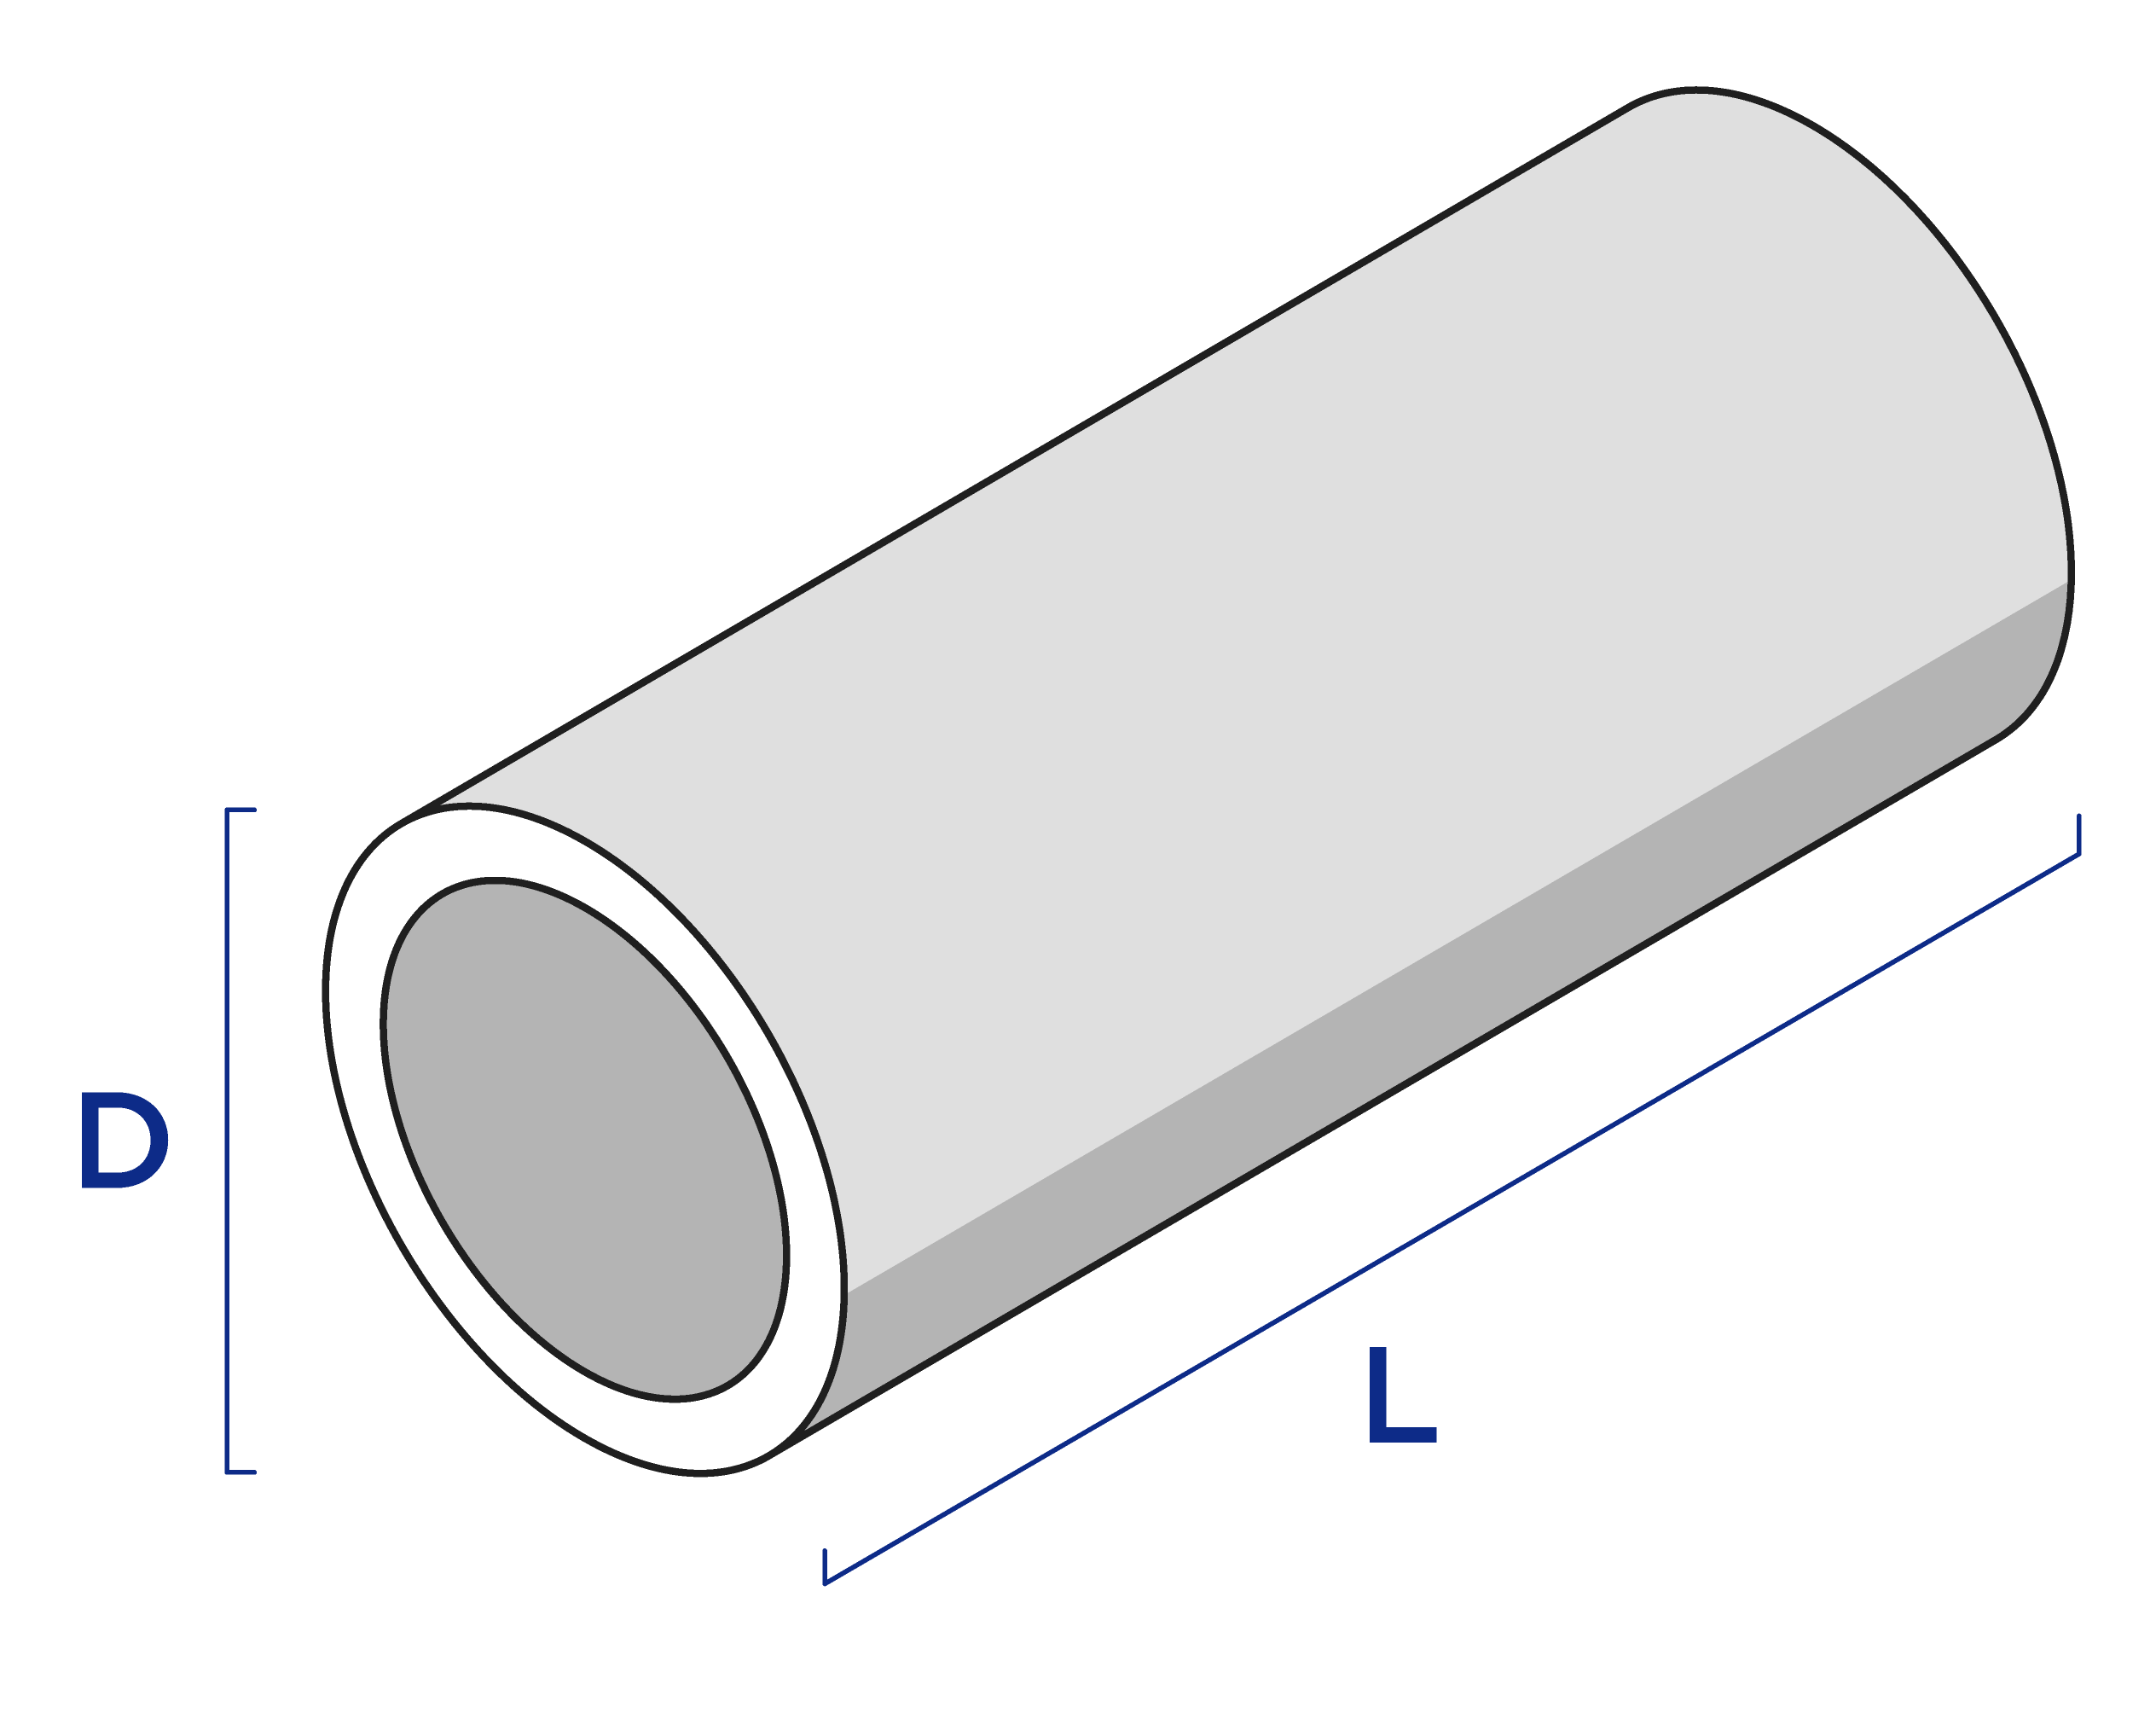 pipe diagram